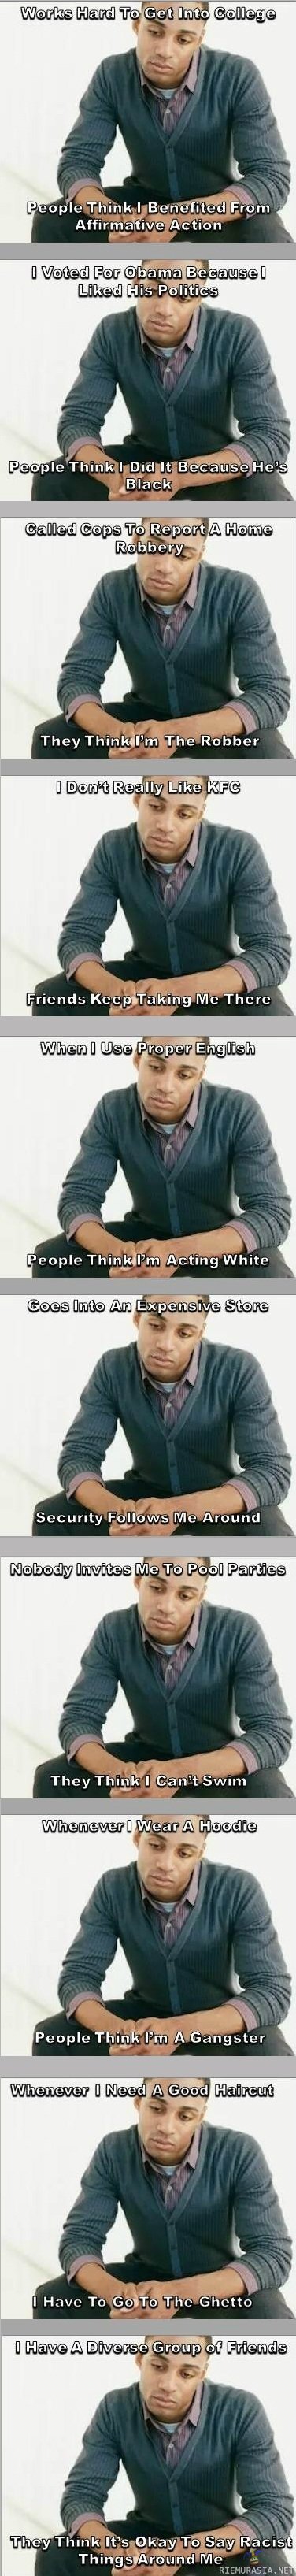 Black people problems